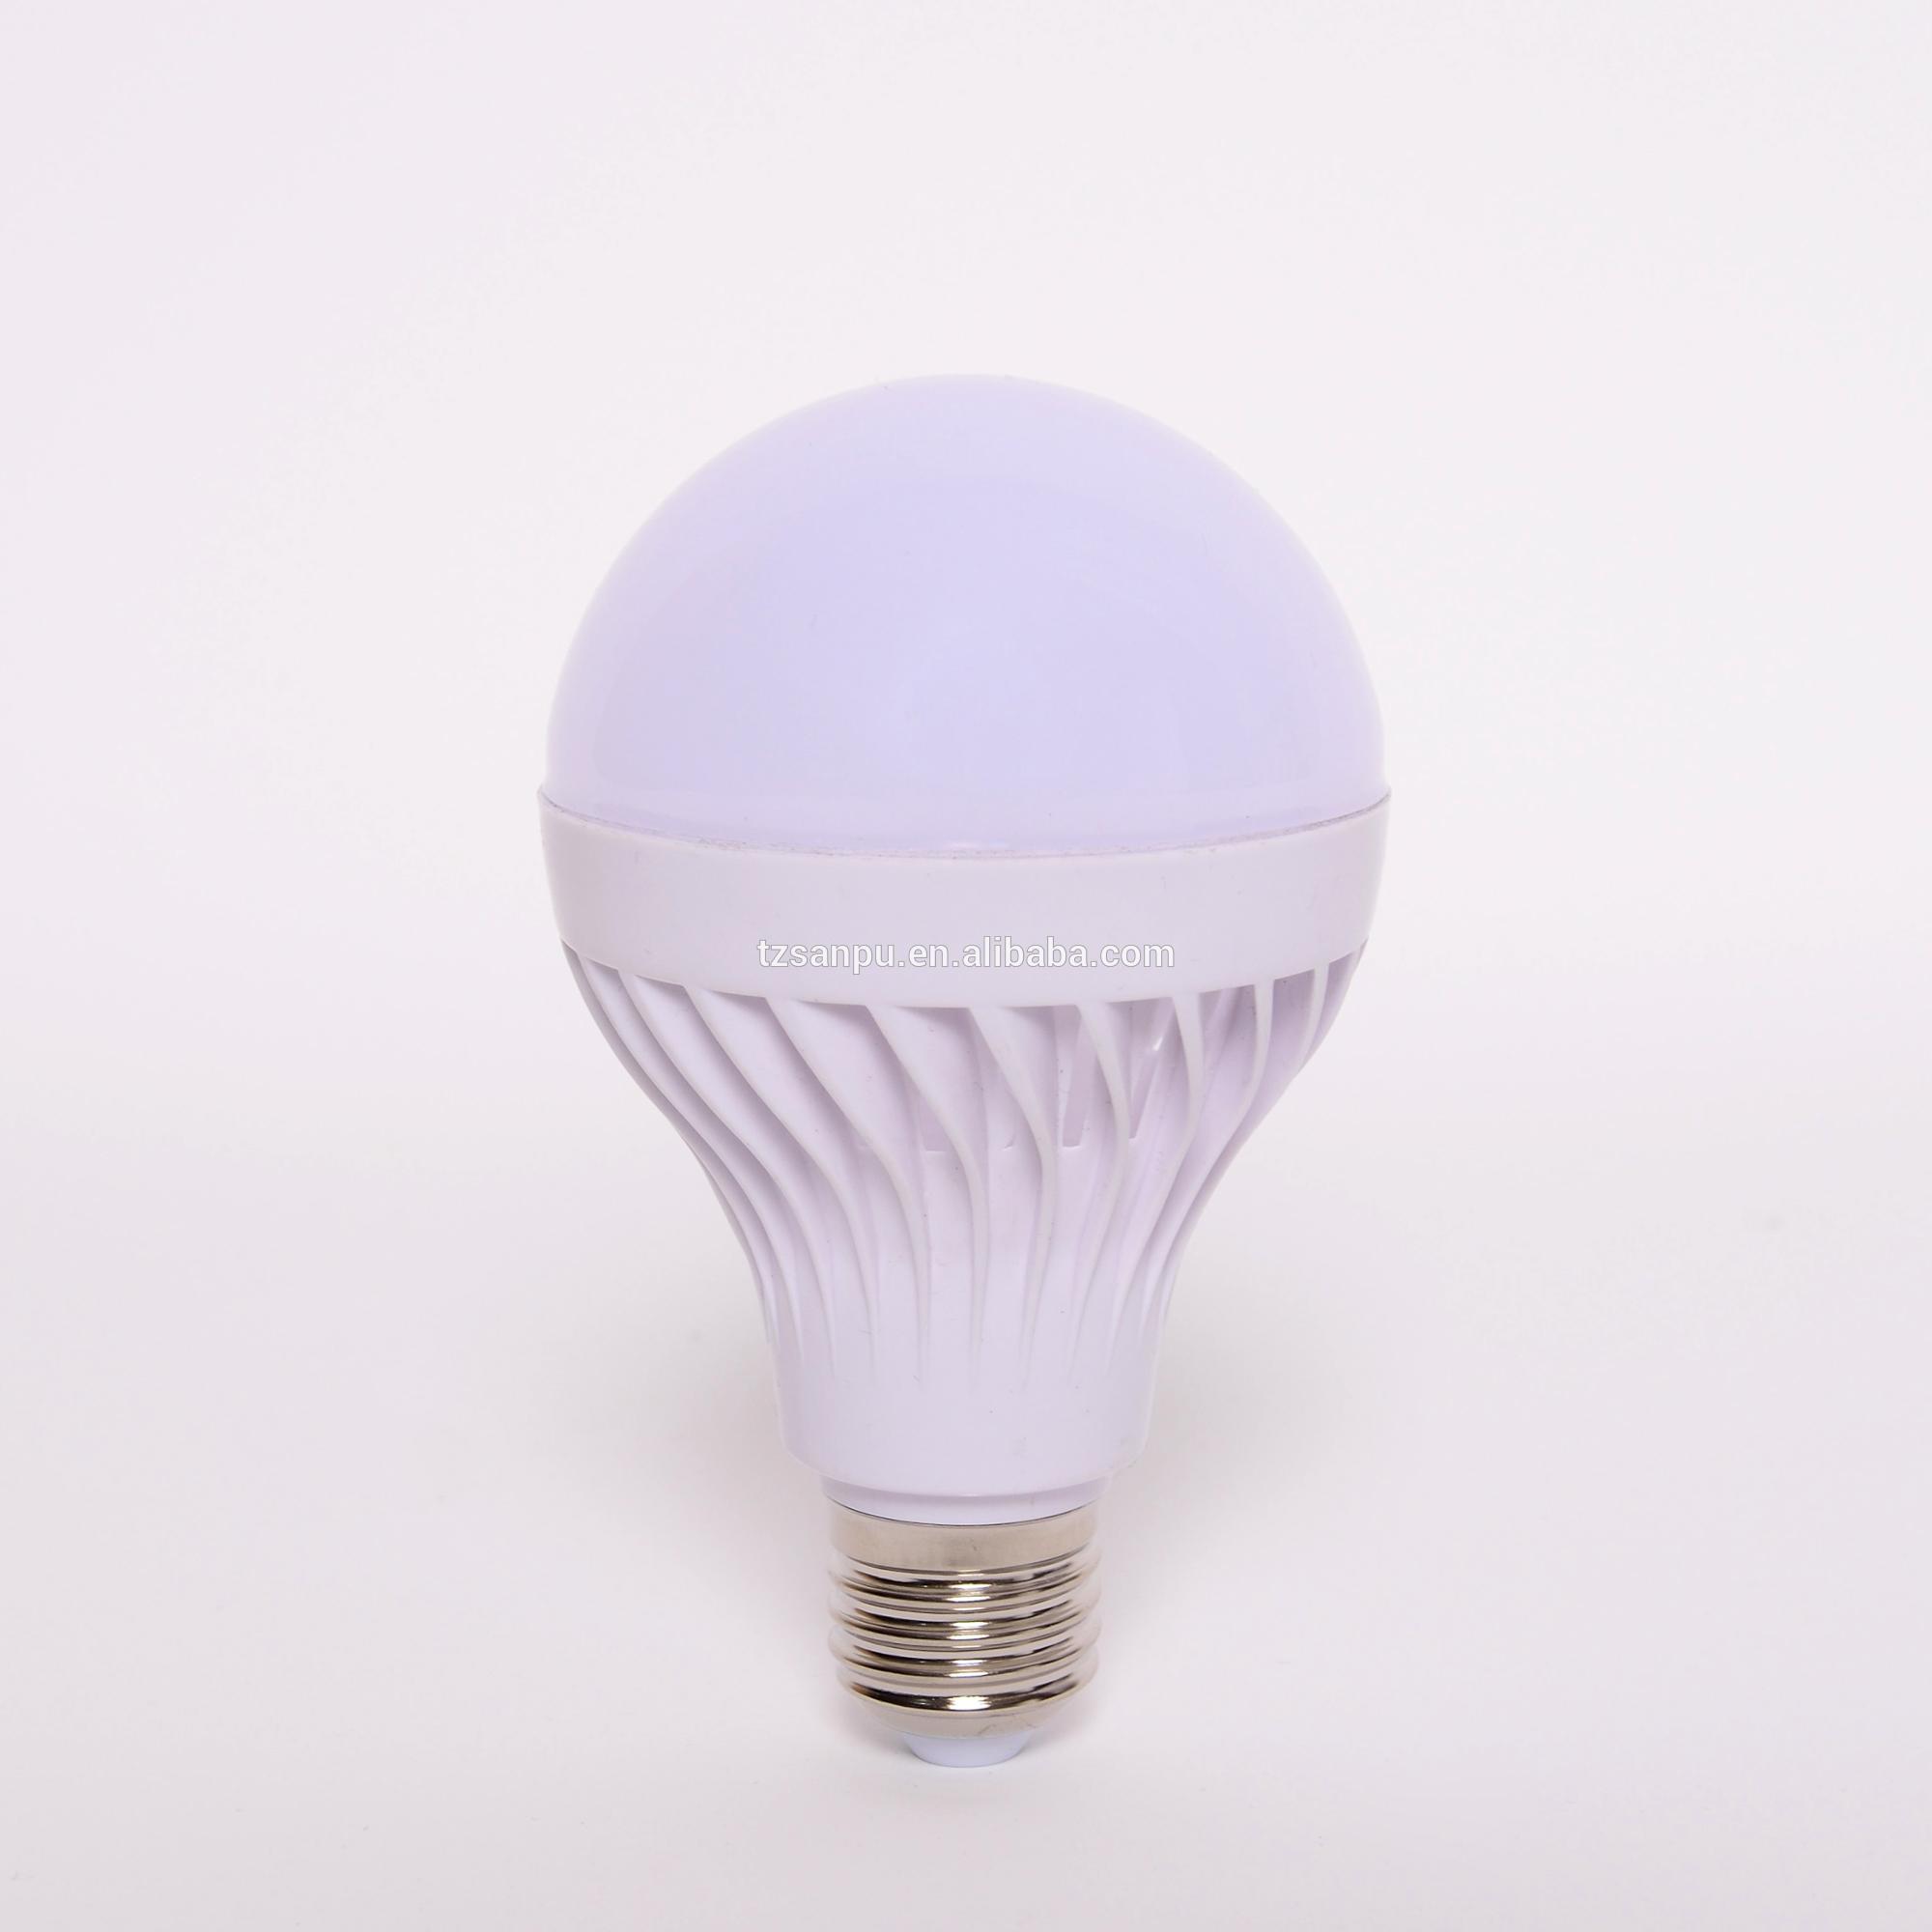 New arrival popular e27 7 watt smart rechargeable emergency electric led lighting bulb